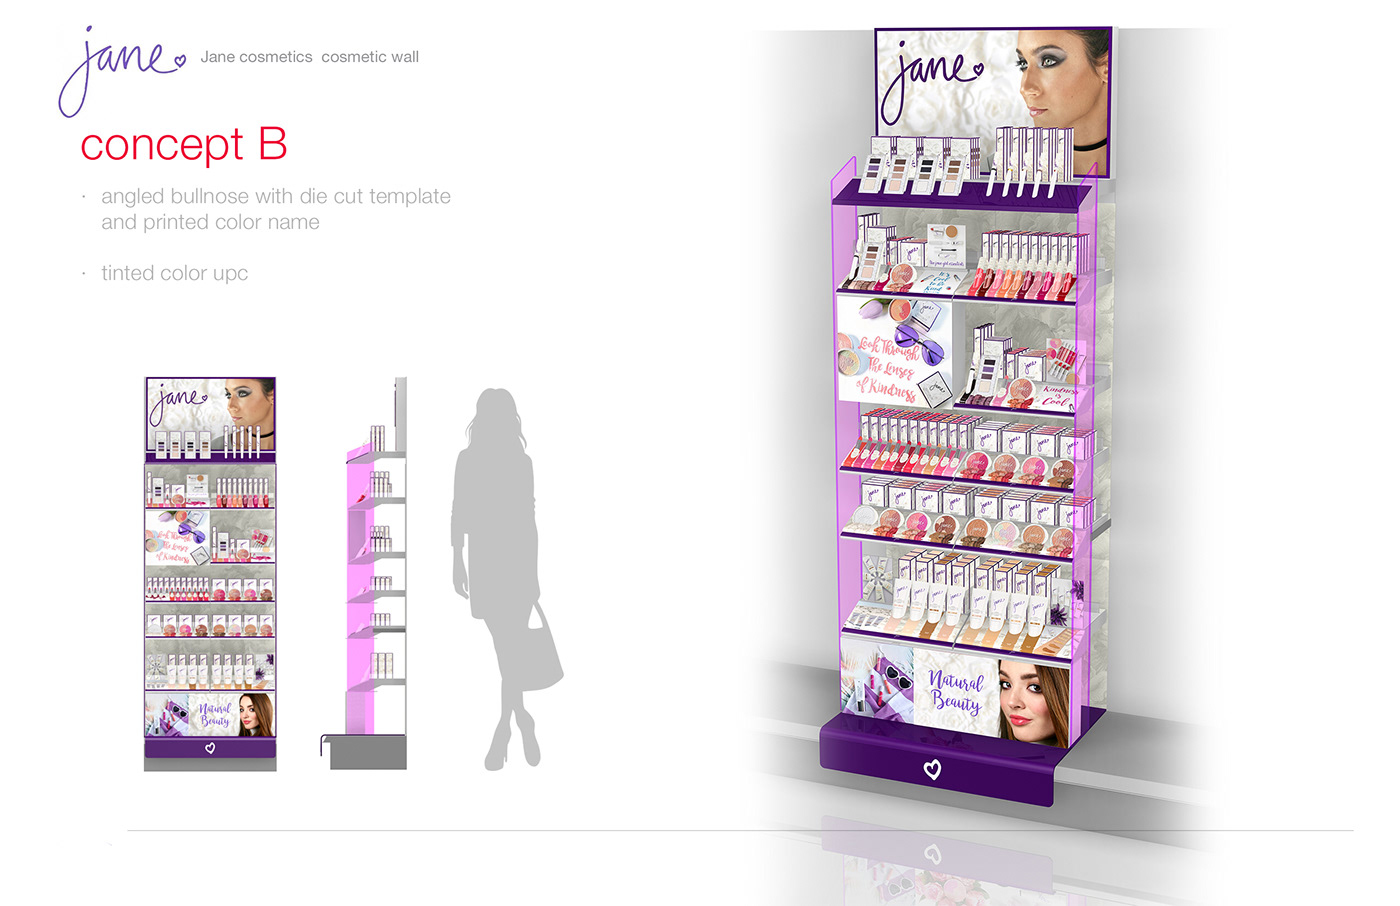 beauty wall cosmetics Cosmetics Display Display jane Jane Cosmetics pop POP Displays Ro Olvera rodrigo olvera